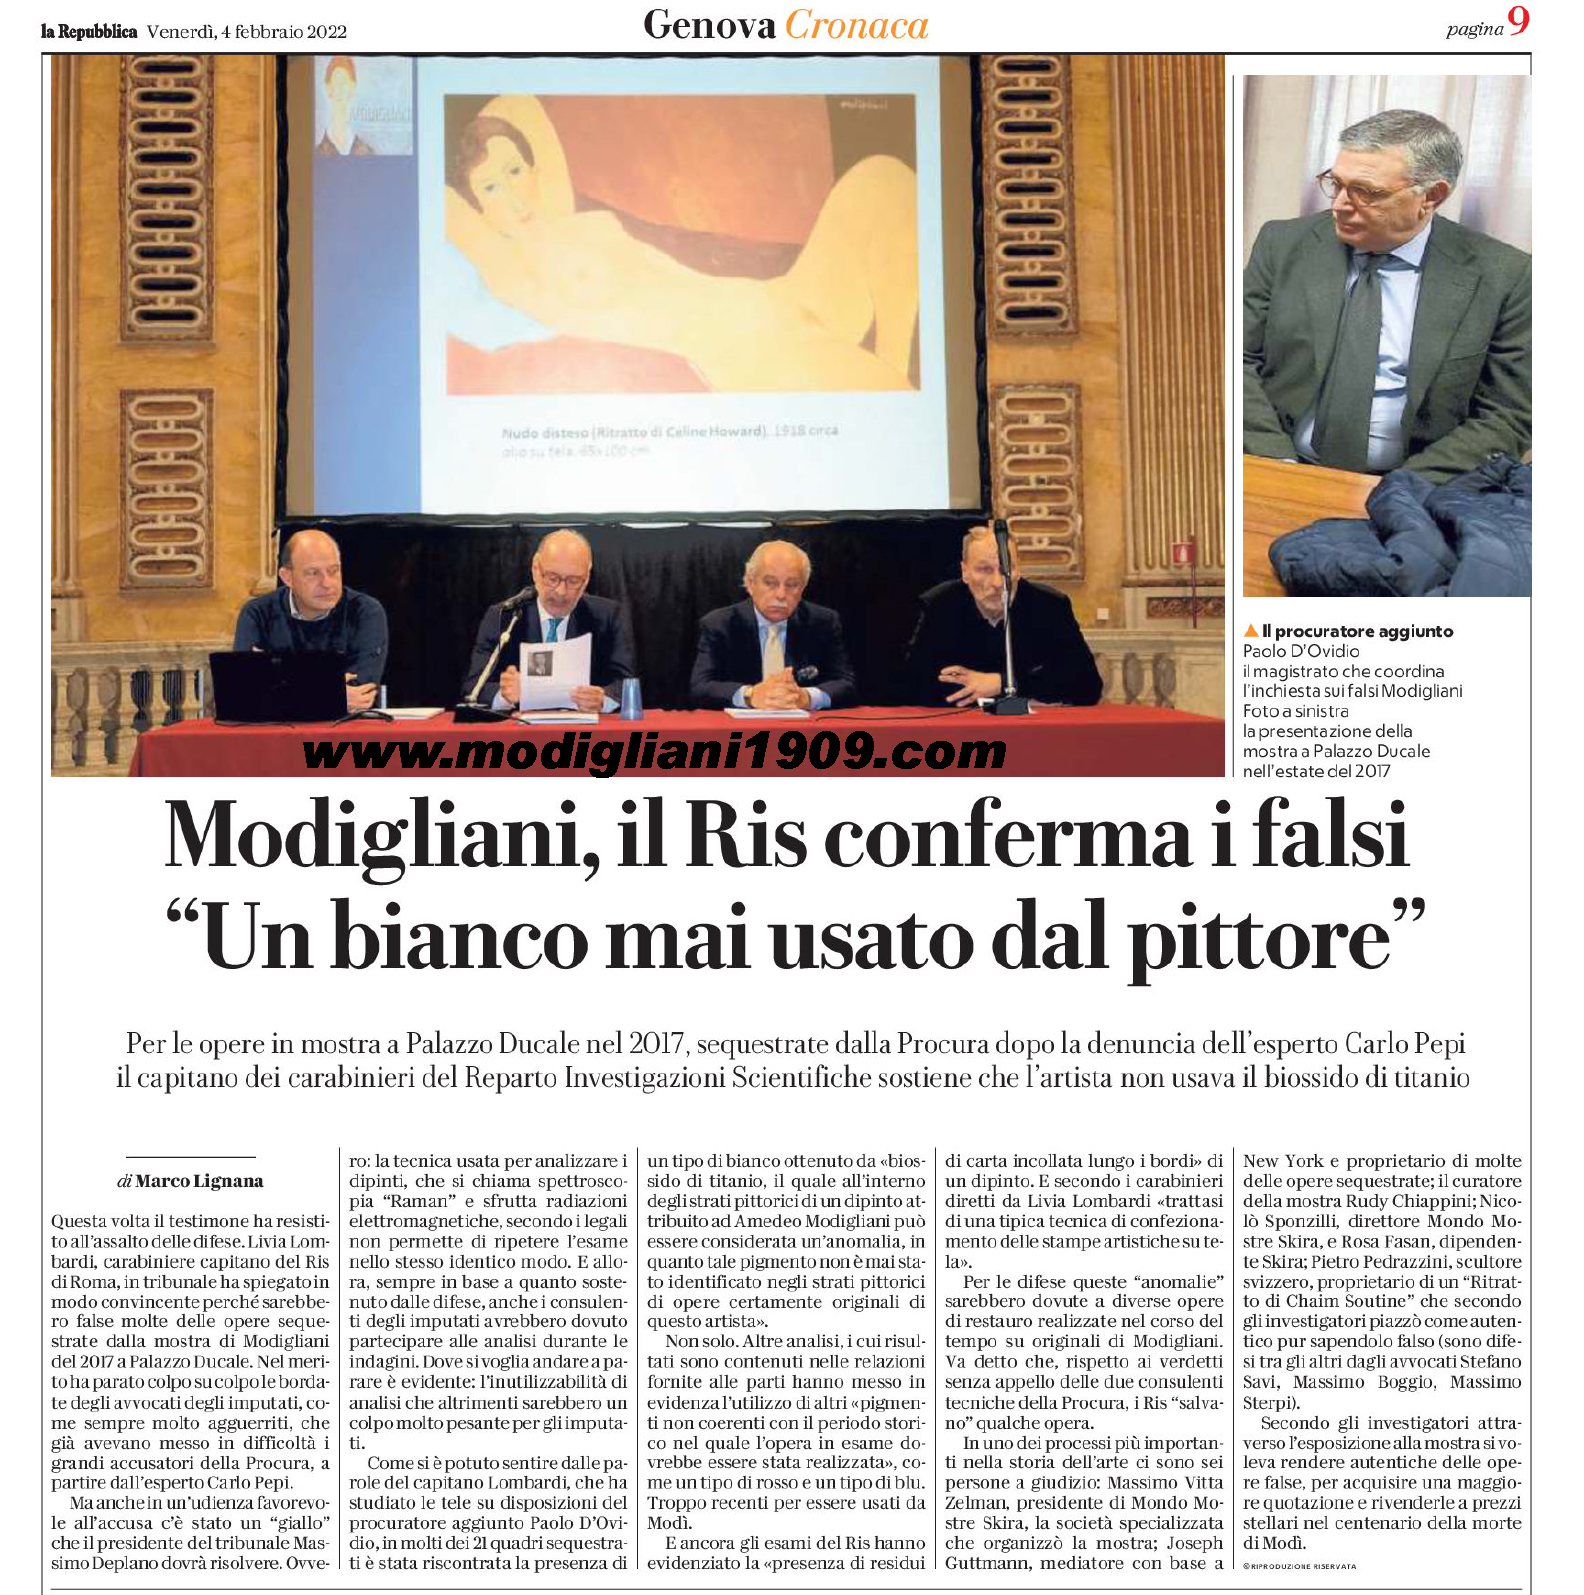 Modigliani, the RIS confirms fakes